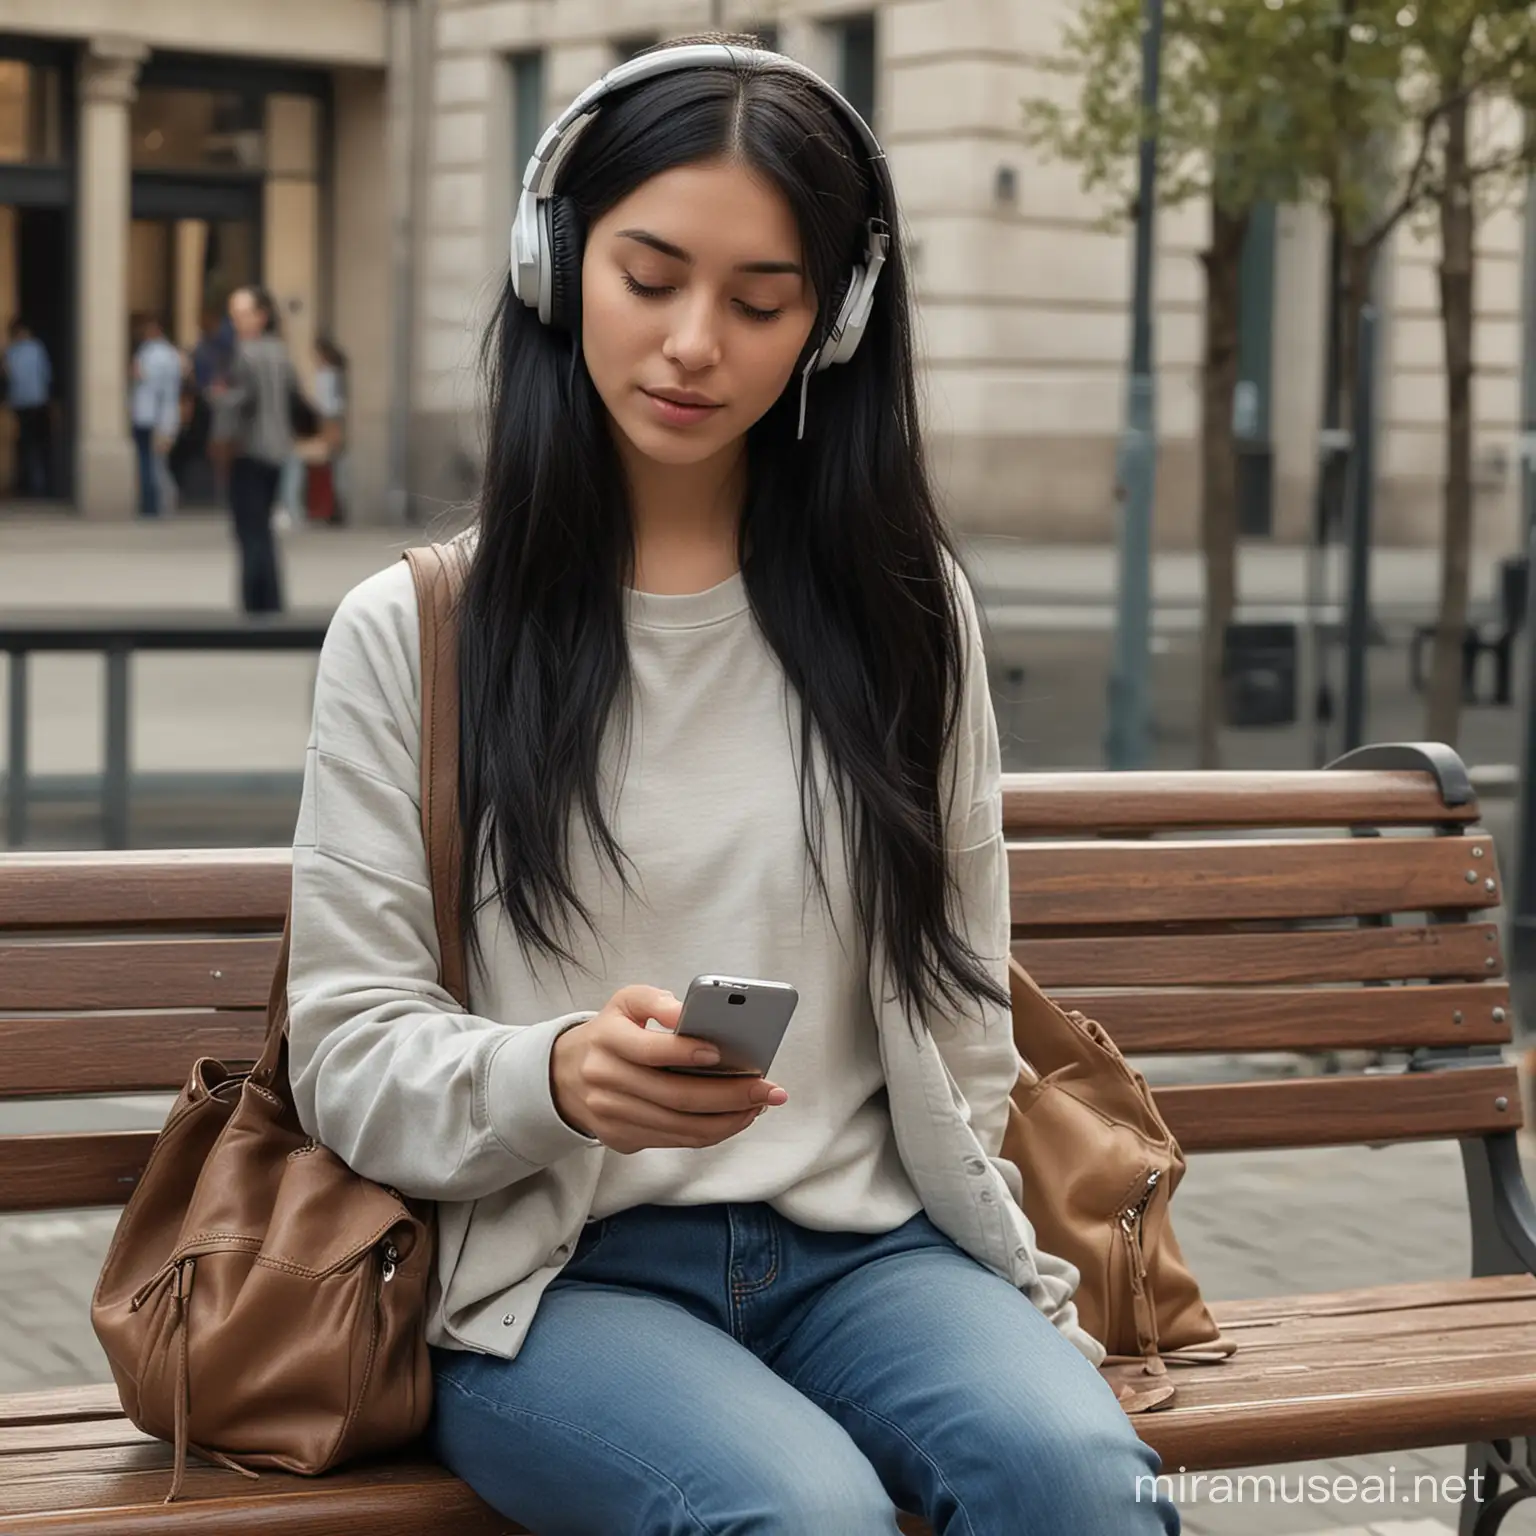 Young Woman Enjoying Music on Bench in Urban Setting